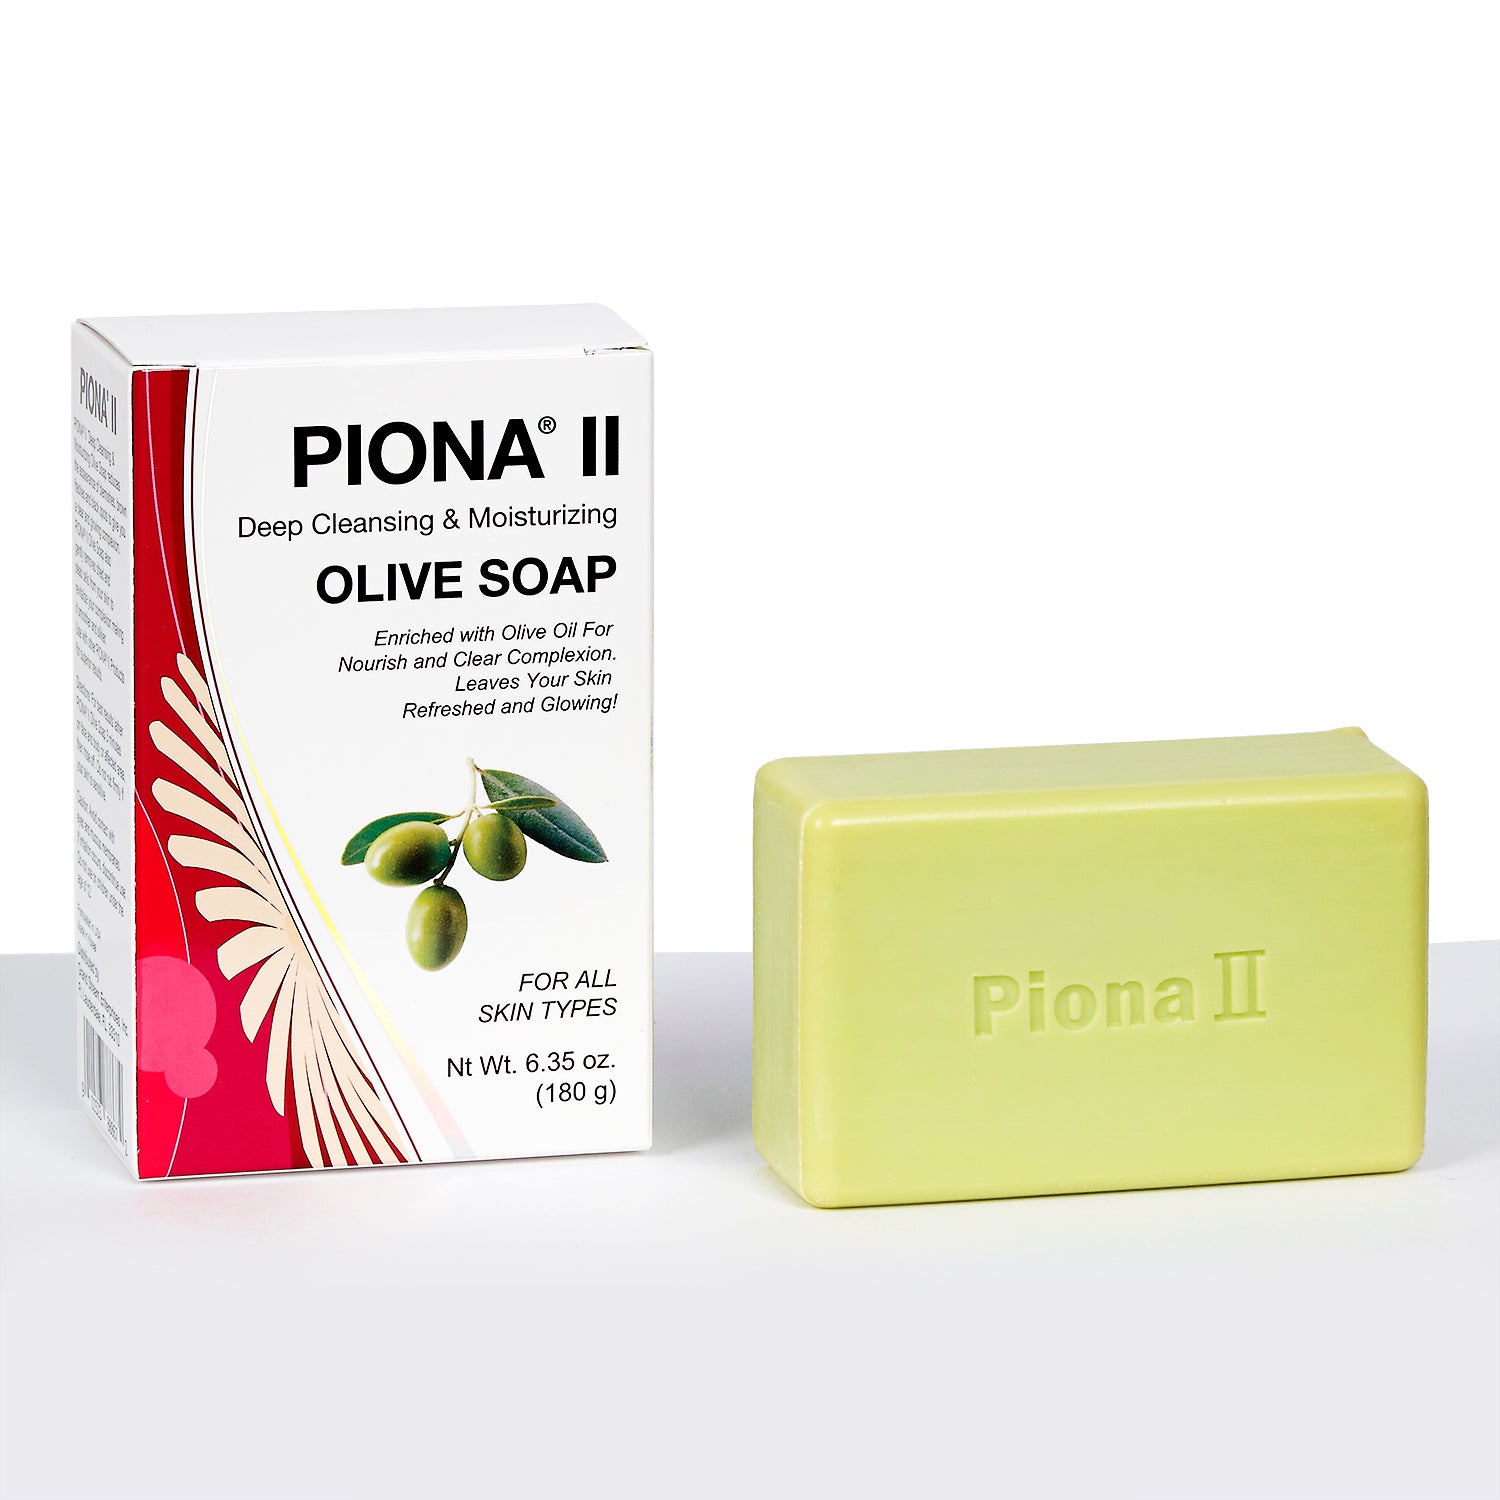 Piona II Deep Cleansing & Moisturizing Olive Soap 6.35